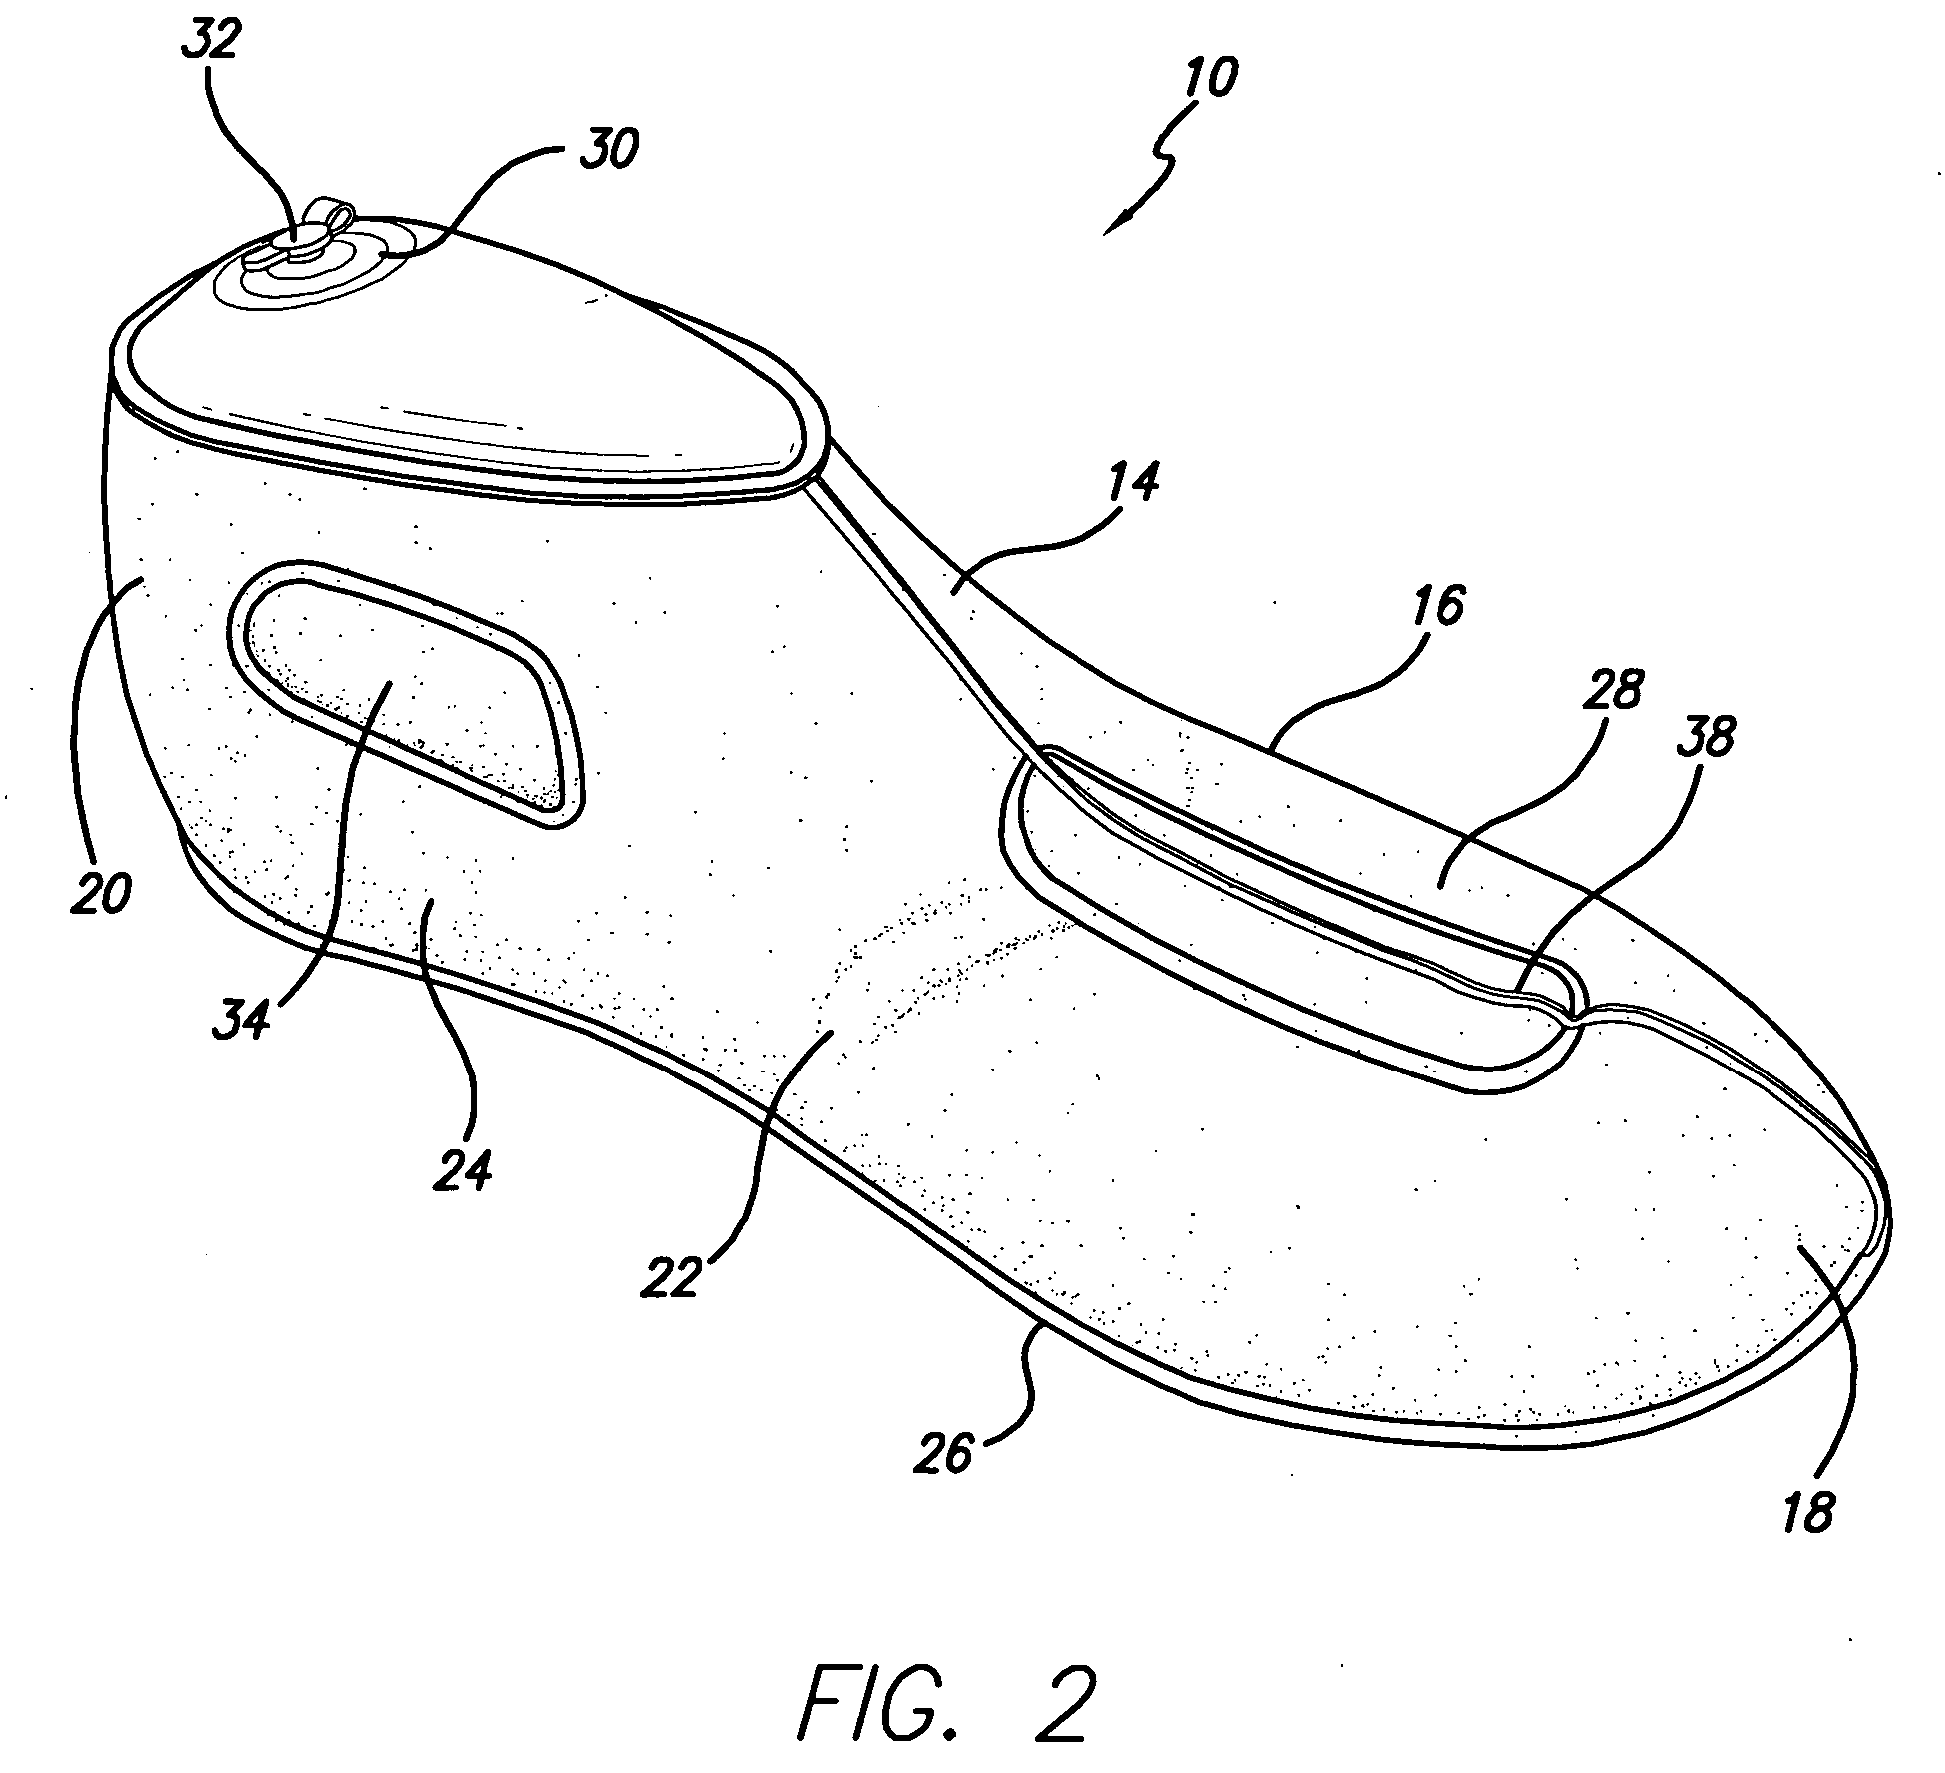 Inflatable shoe tree